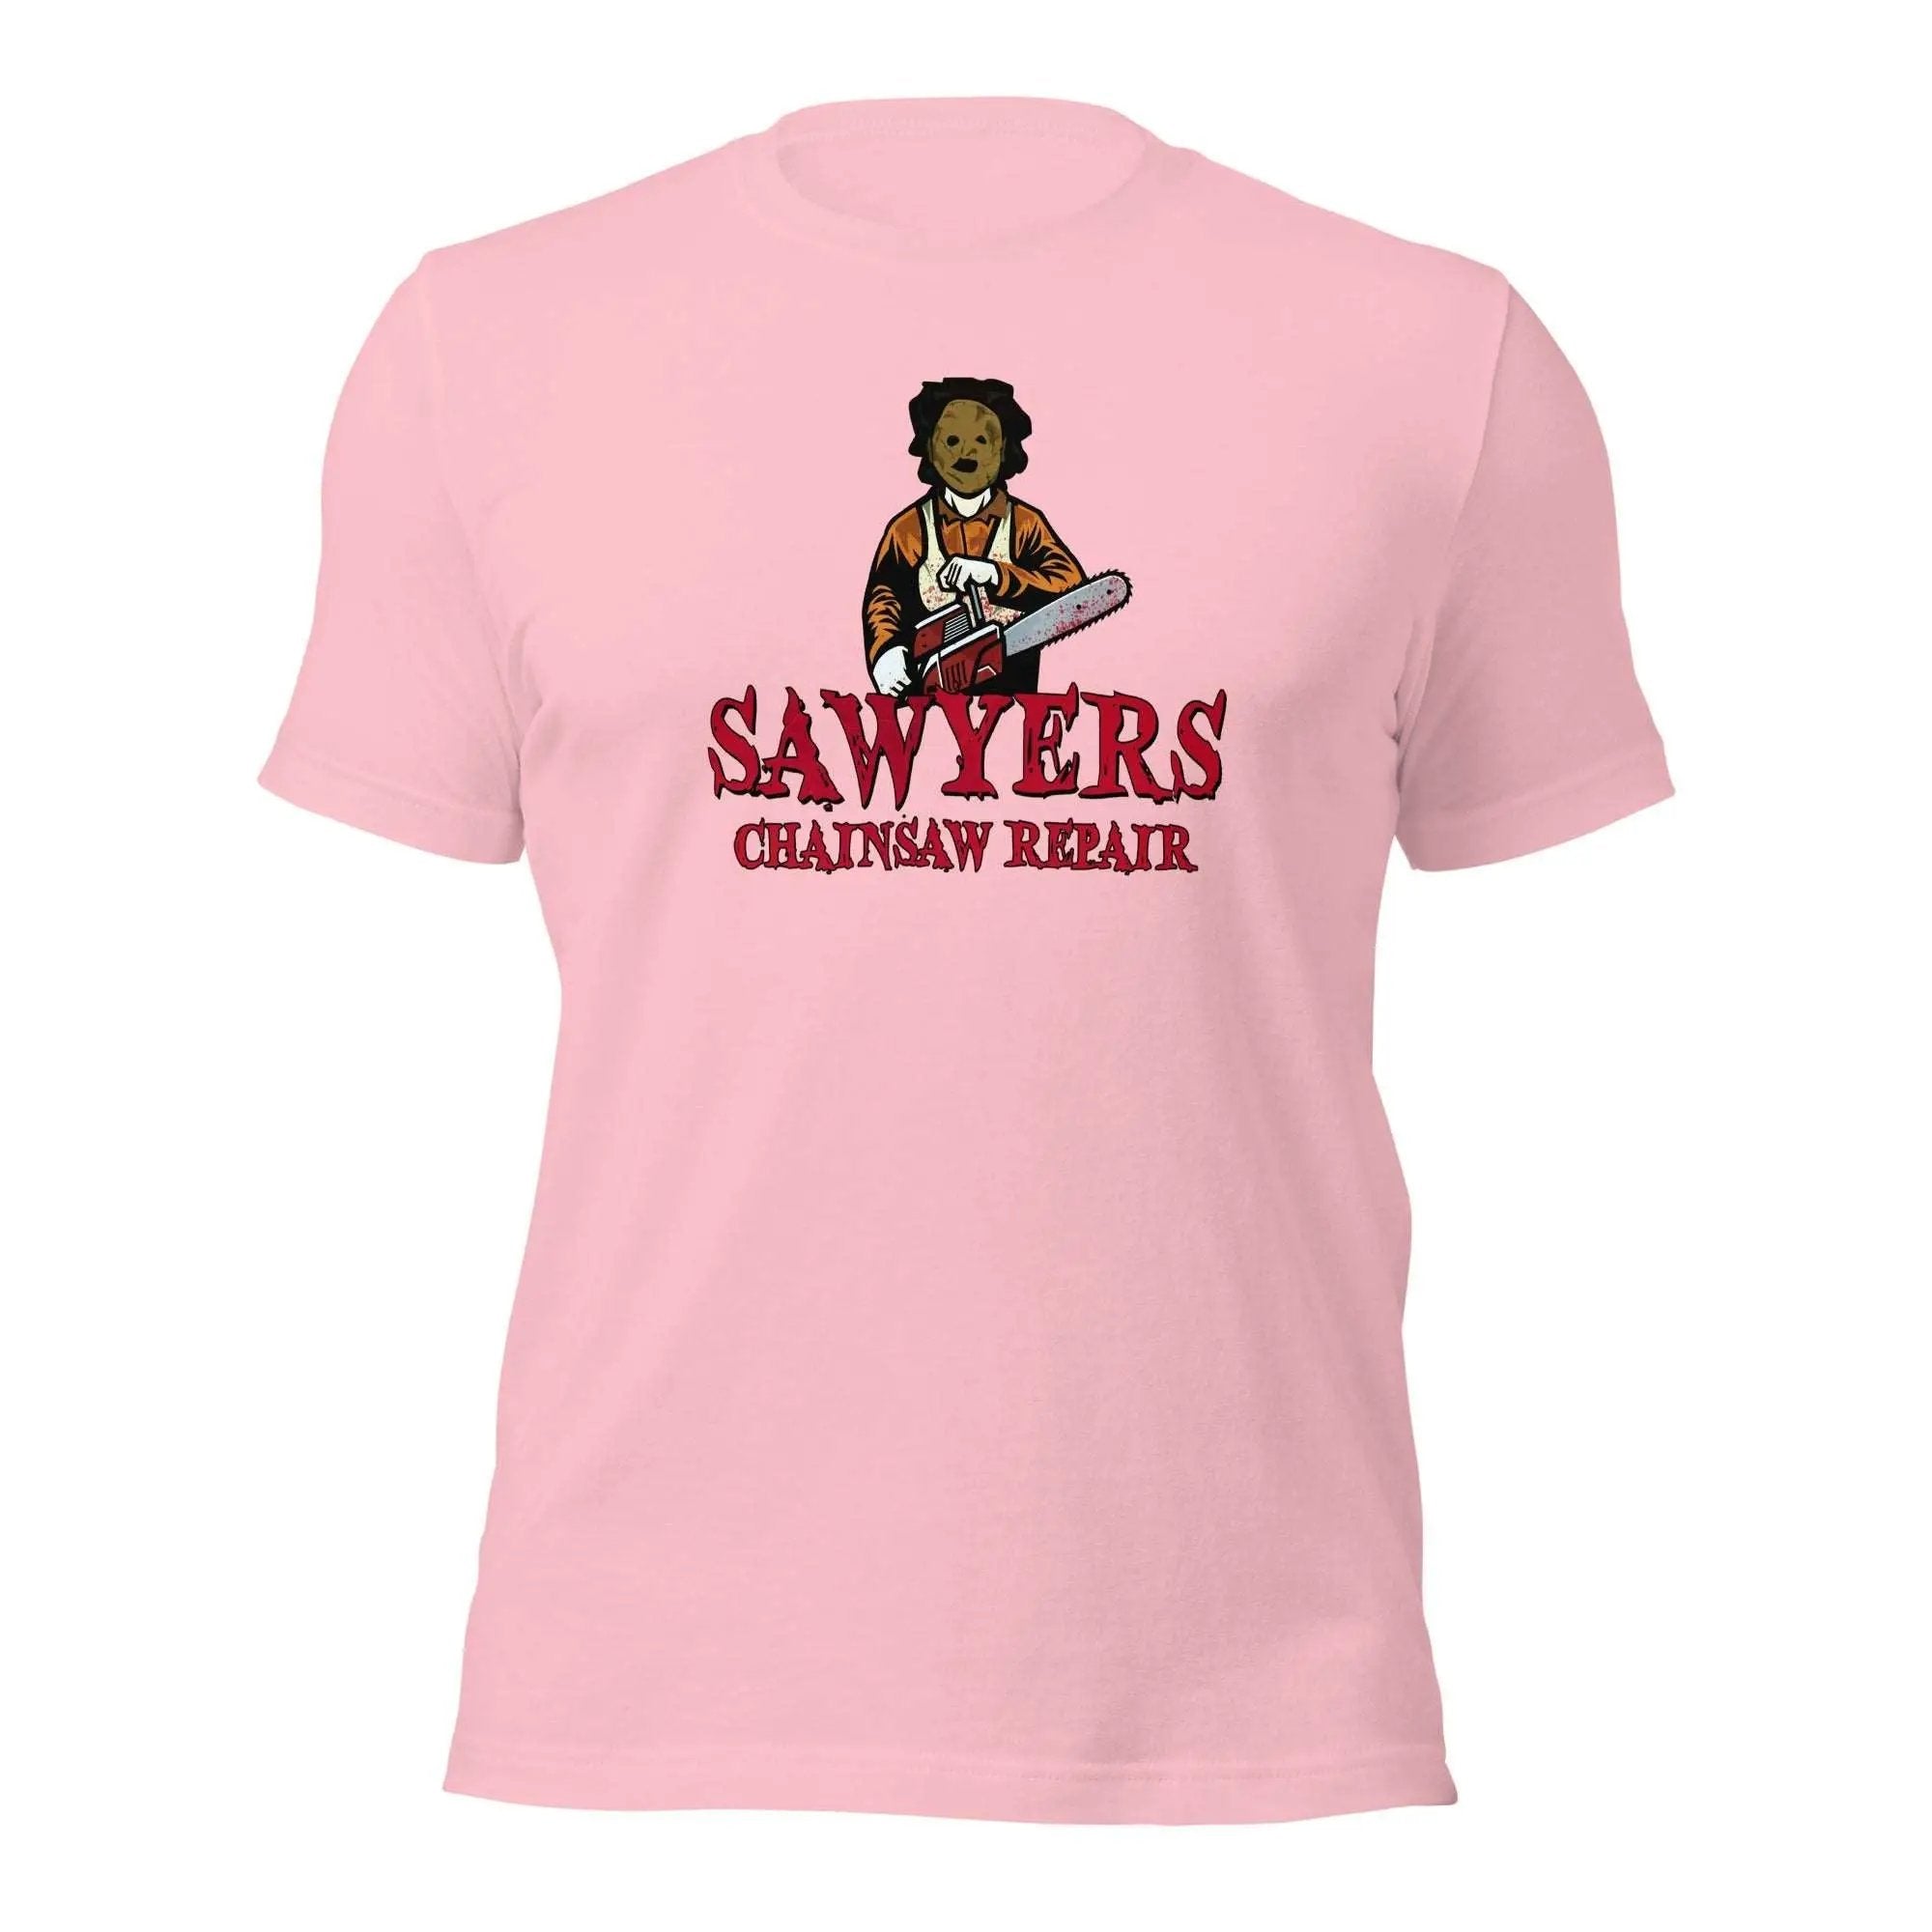 Sawyers Chainsaw Repair Unisex t-shirt